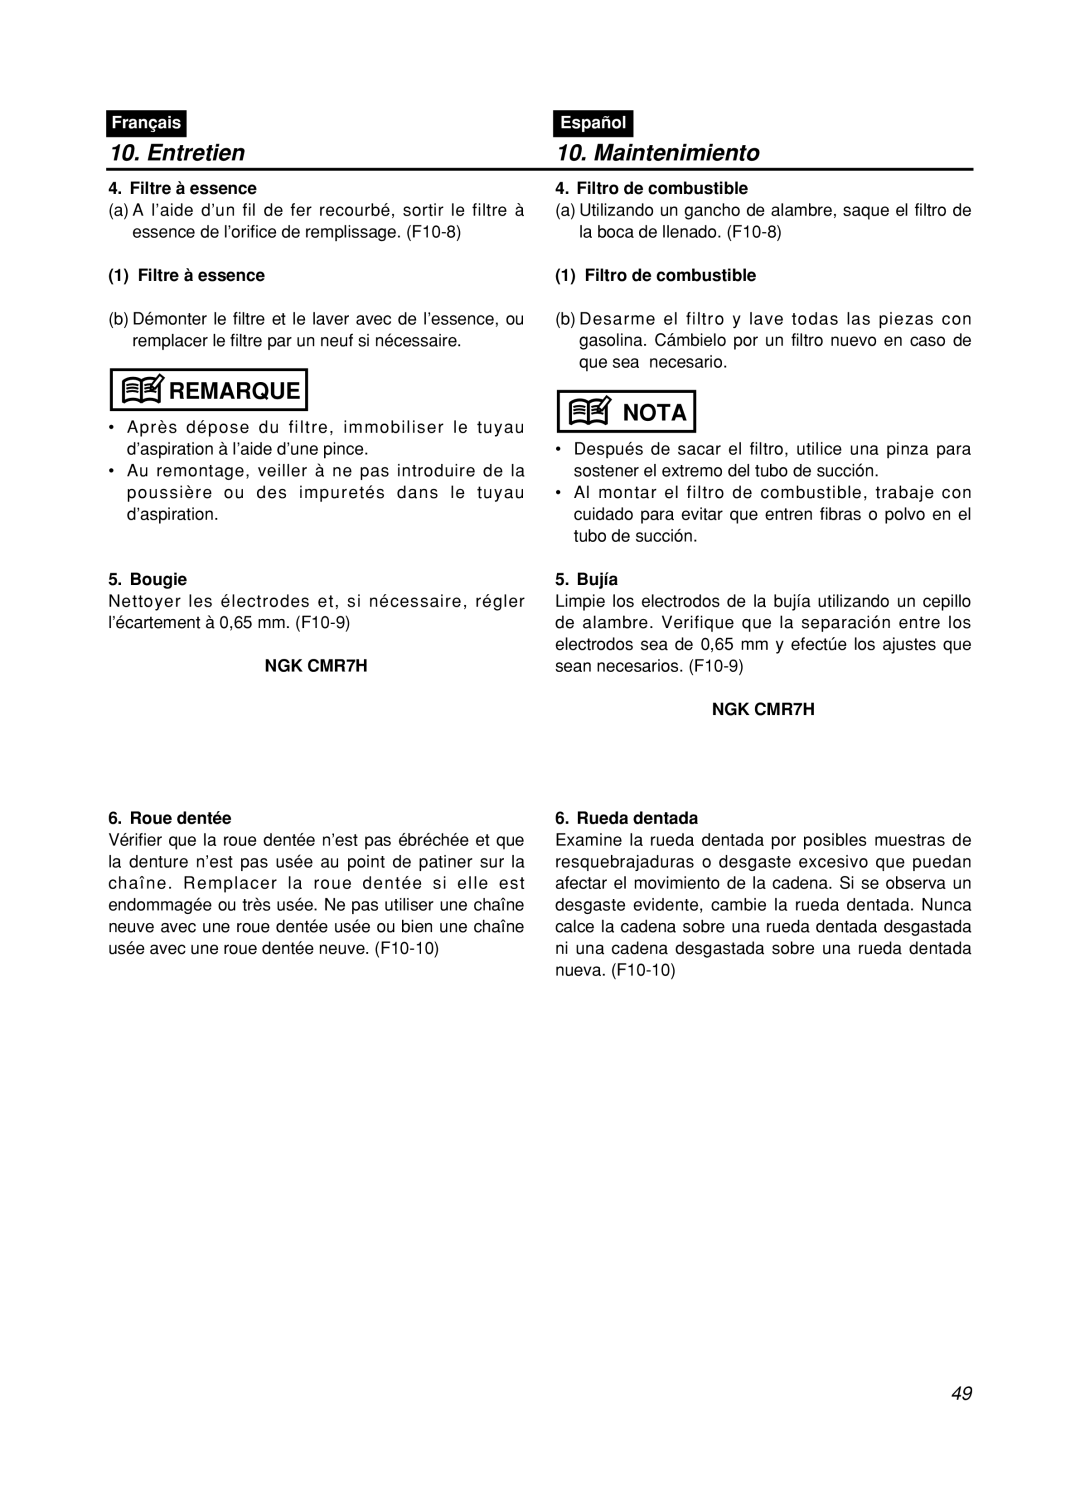 Zenoah GZ400 manual Entretien, Maintenimiento, Remarque, Nota, Français, Español 